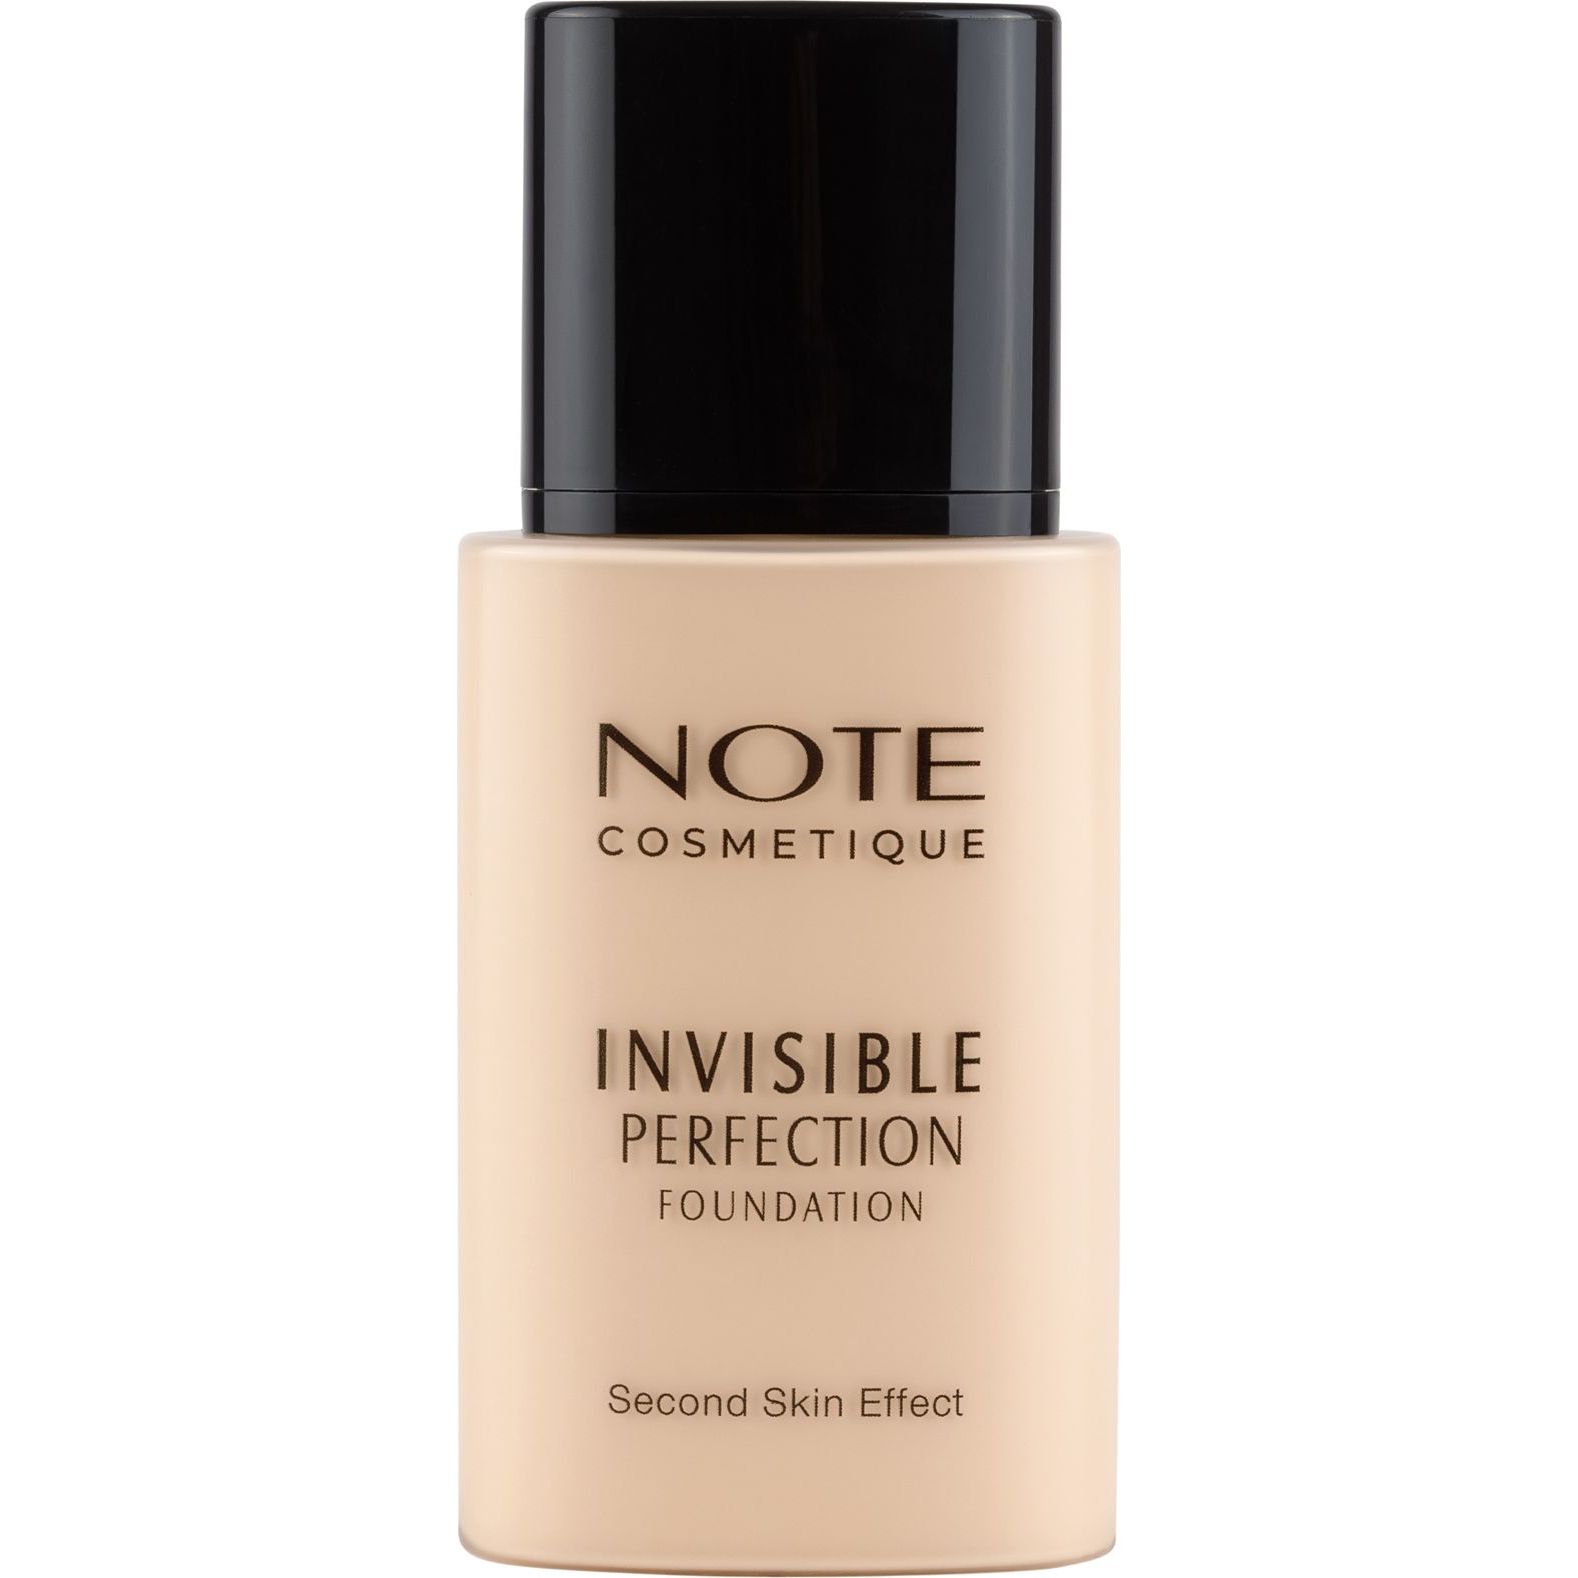 Тональная основа Note Cosmetique Invisible Perfection Foundation тон 110 (Fair Ivory) 35 мл - фото 1